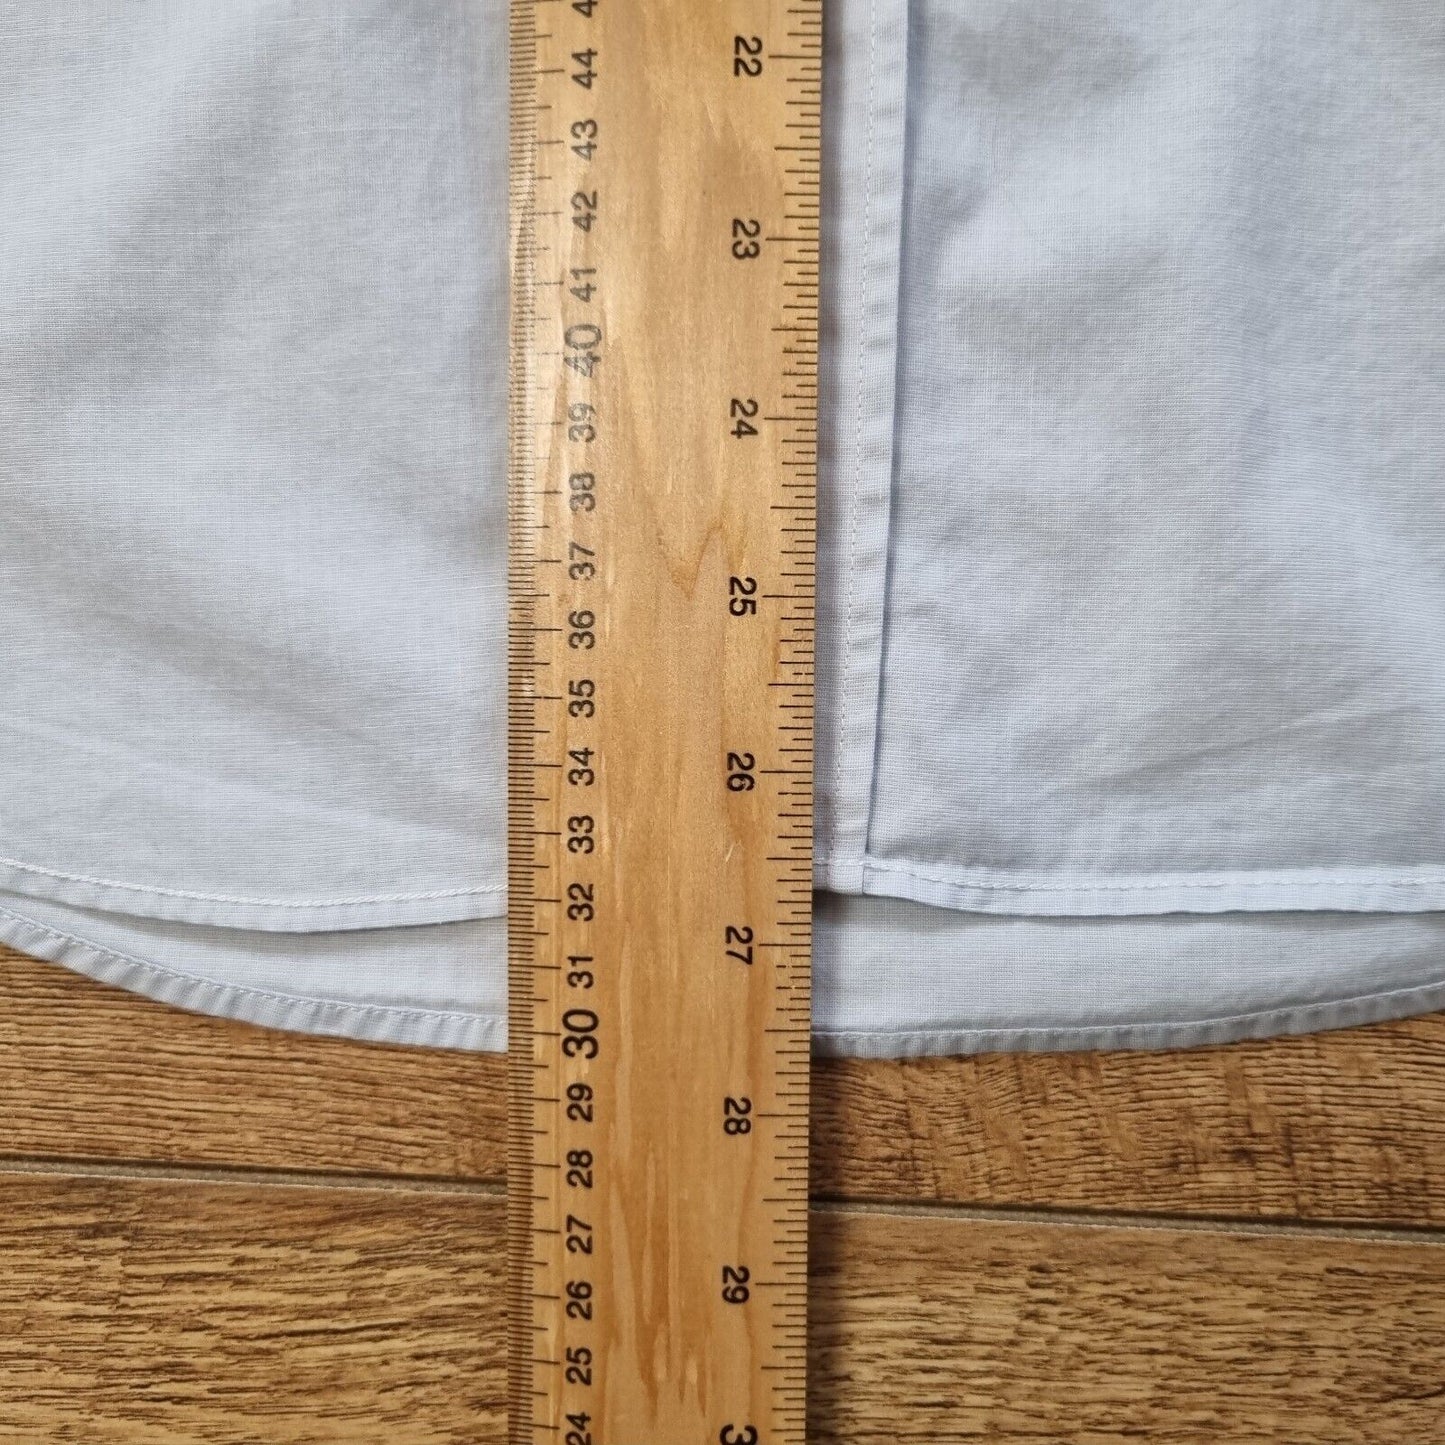 Lacoste Mens Short Sleeve Shirt 100% Cotton Button Down Collar Excellent Cond